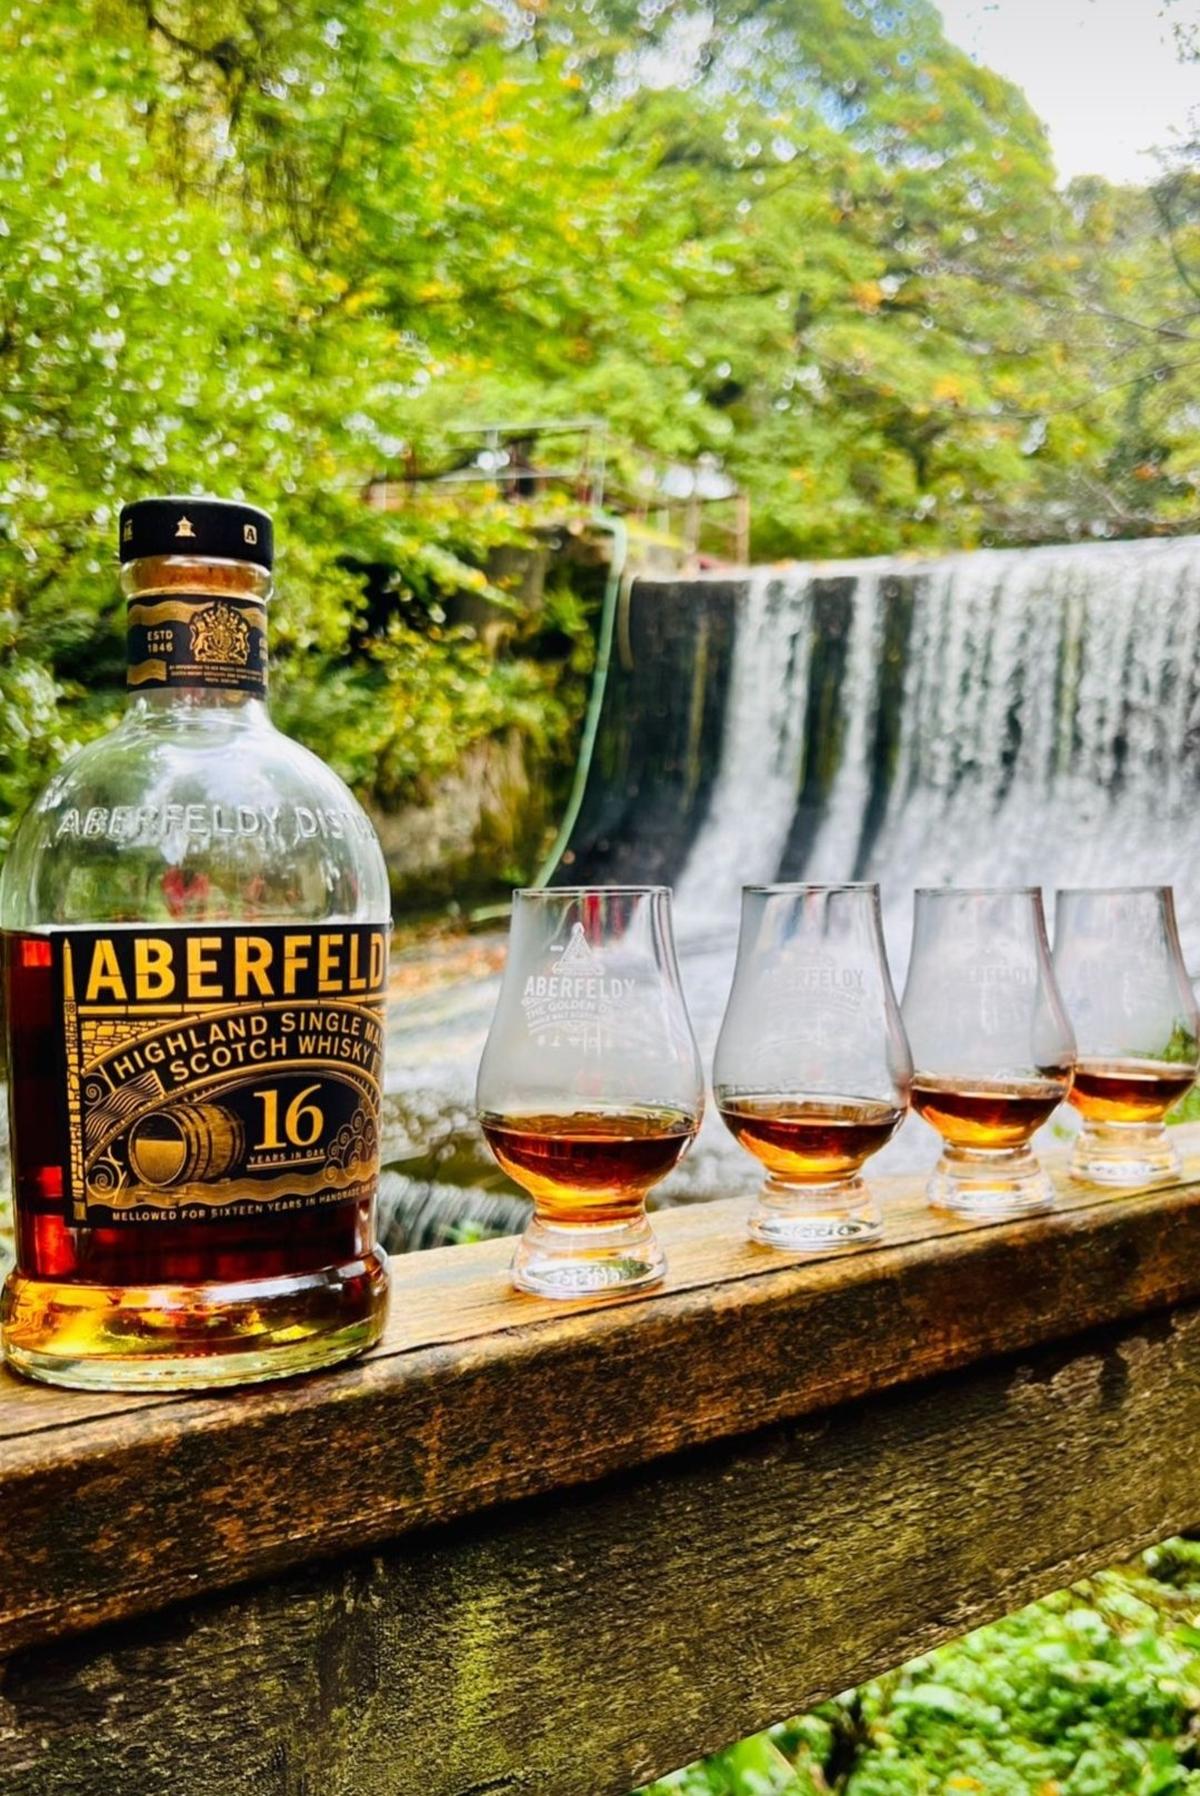 Scotland’s Aberfeldy whisky